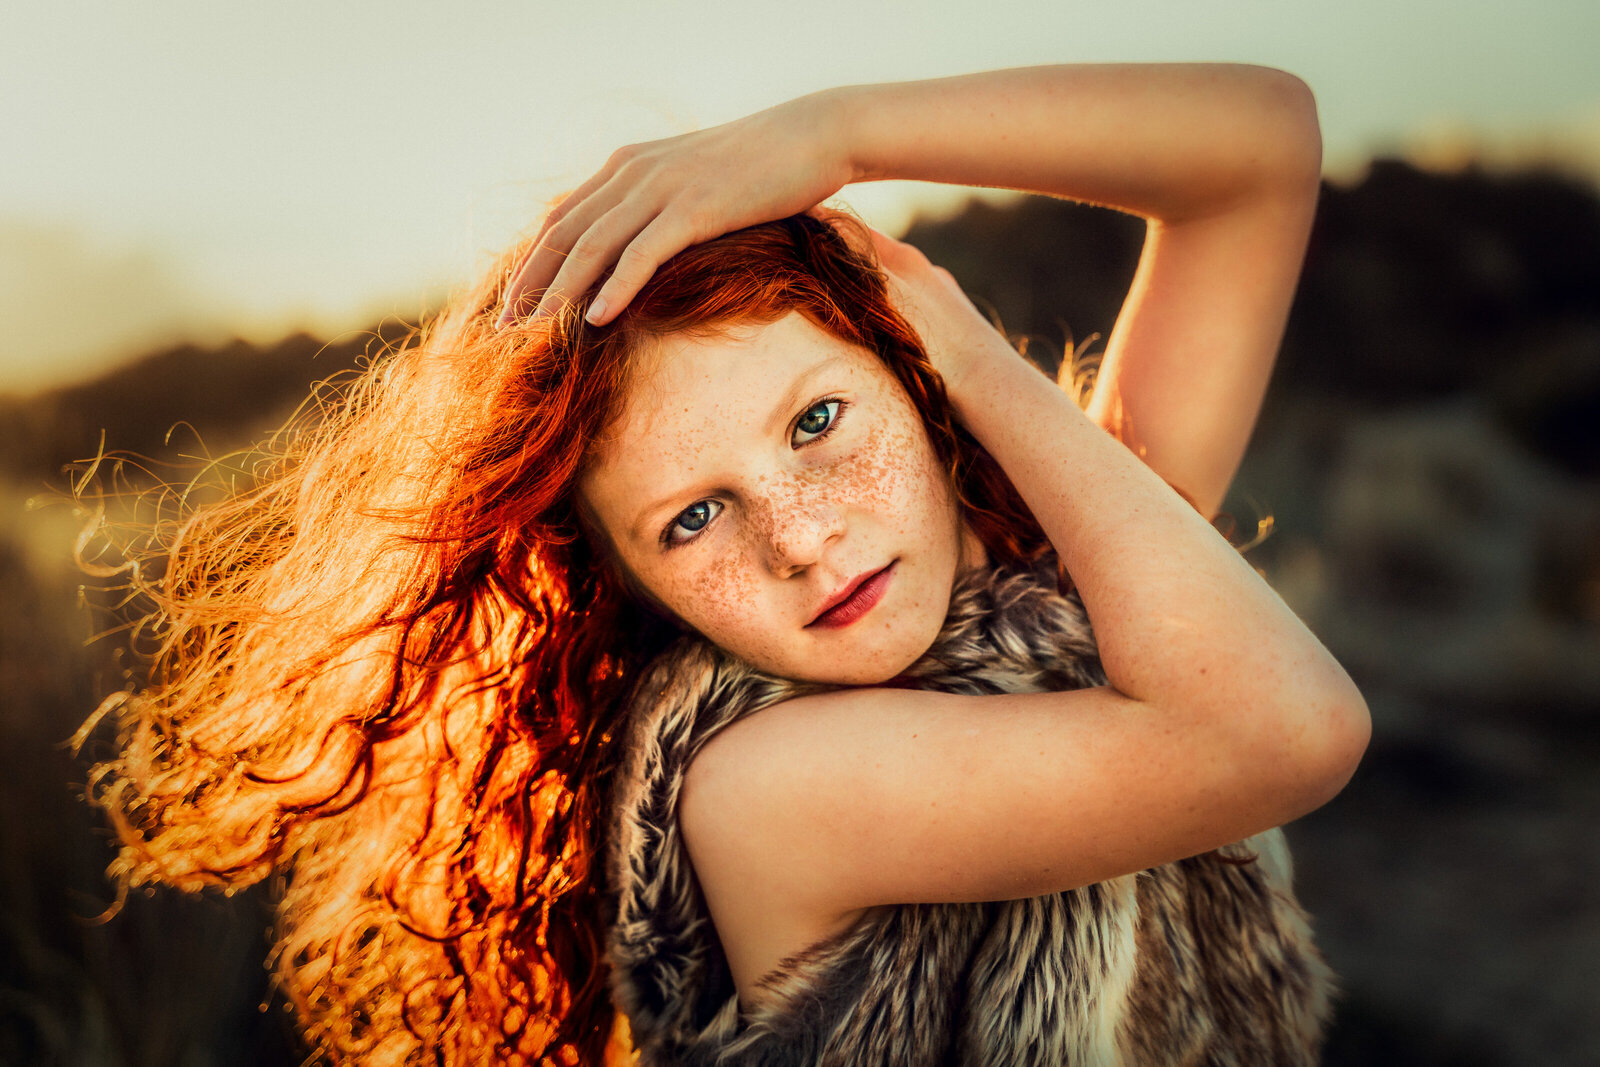 Mount-photographer-fineart-beach-child-redhead-8-2